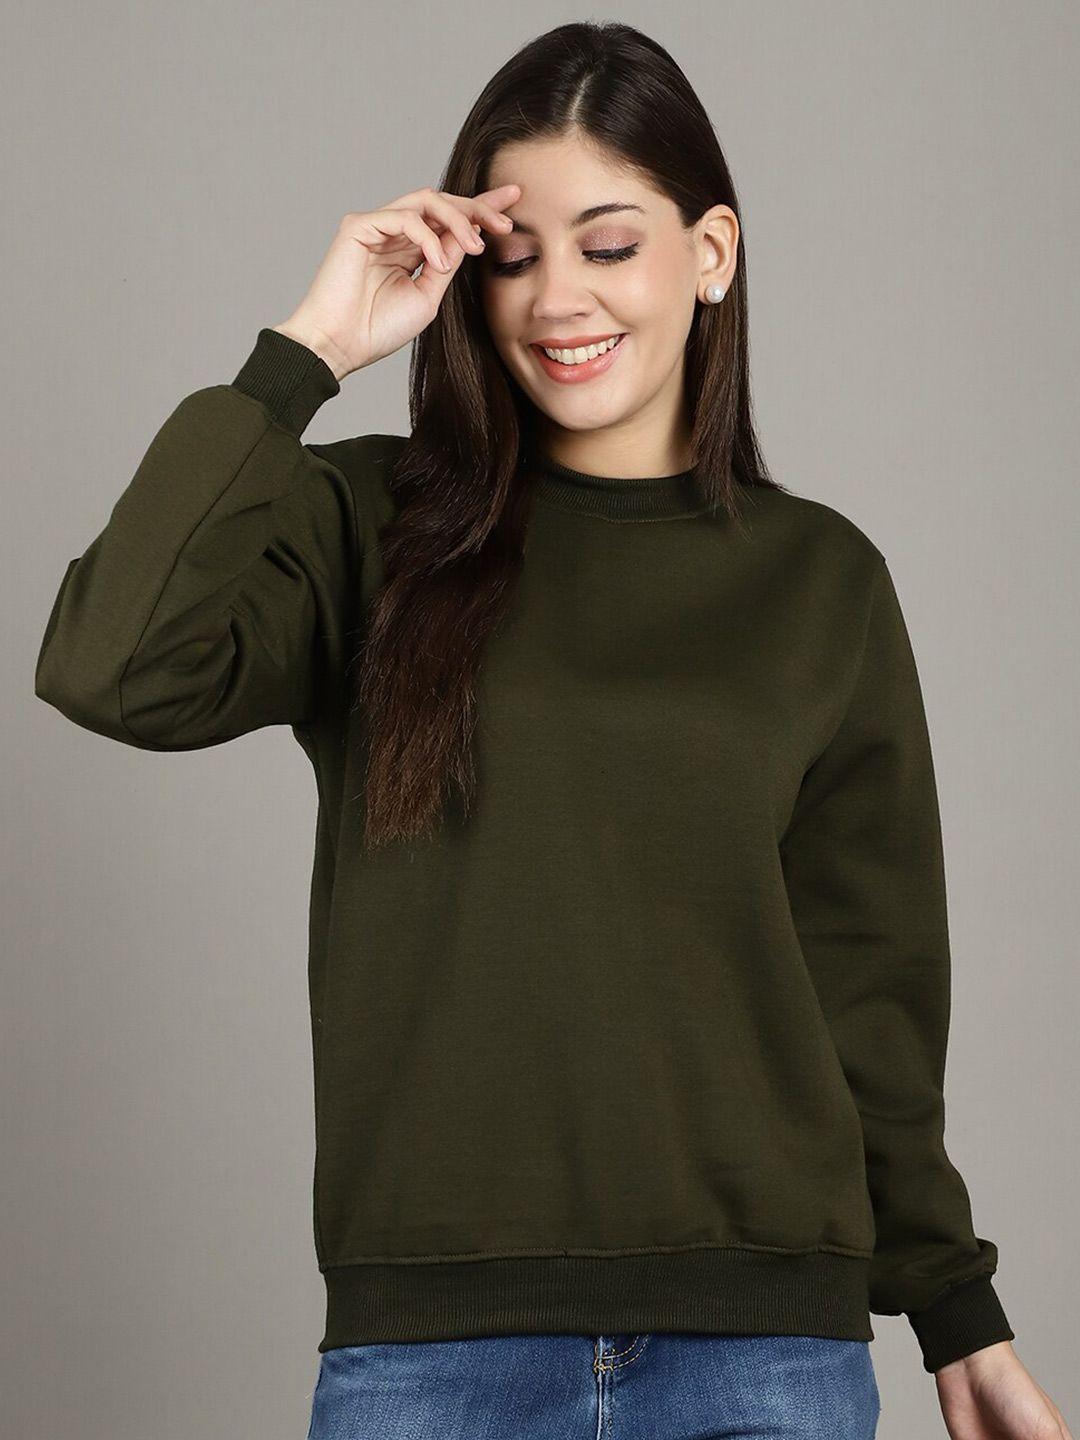 gracit women olive green sweatshirt